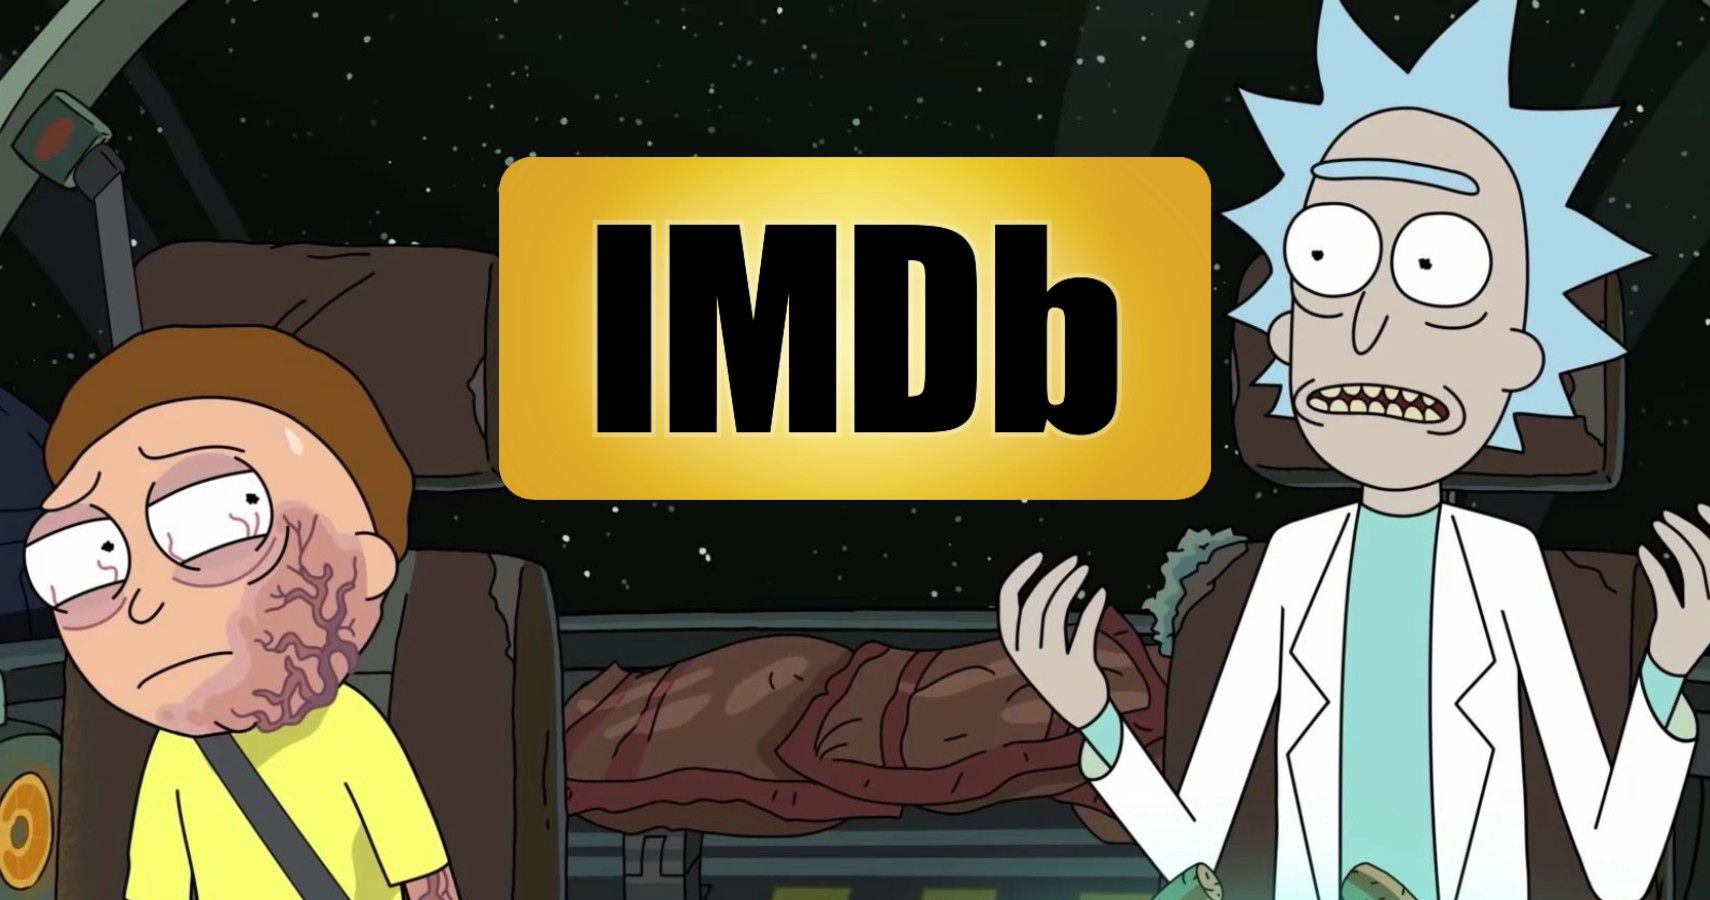 Rick Morty Season 4 Every Episode Ranked According To Imdb